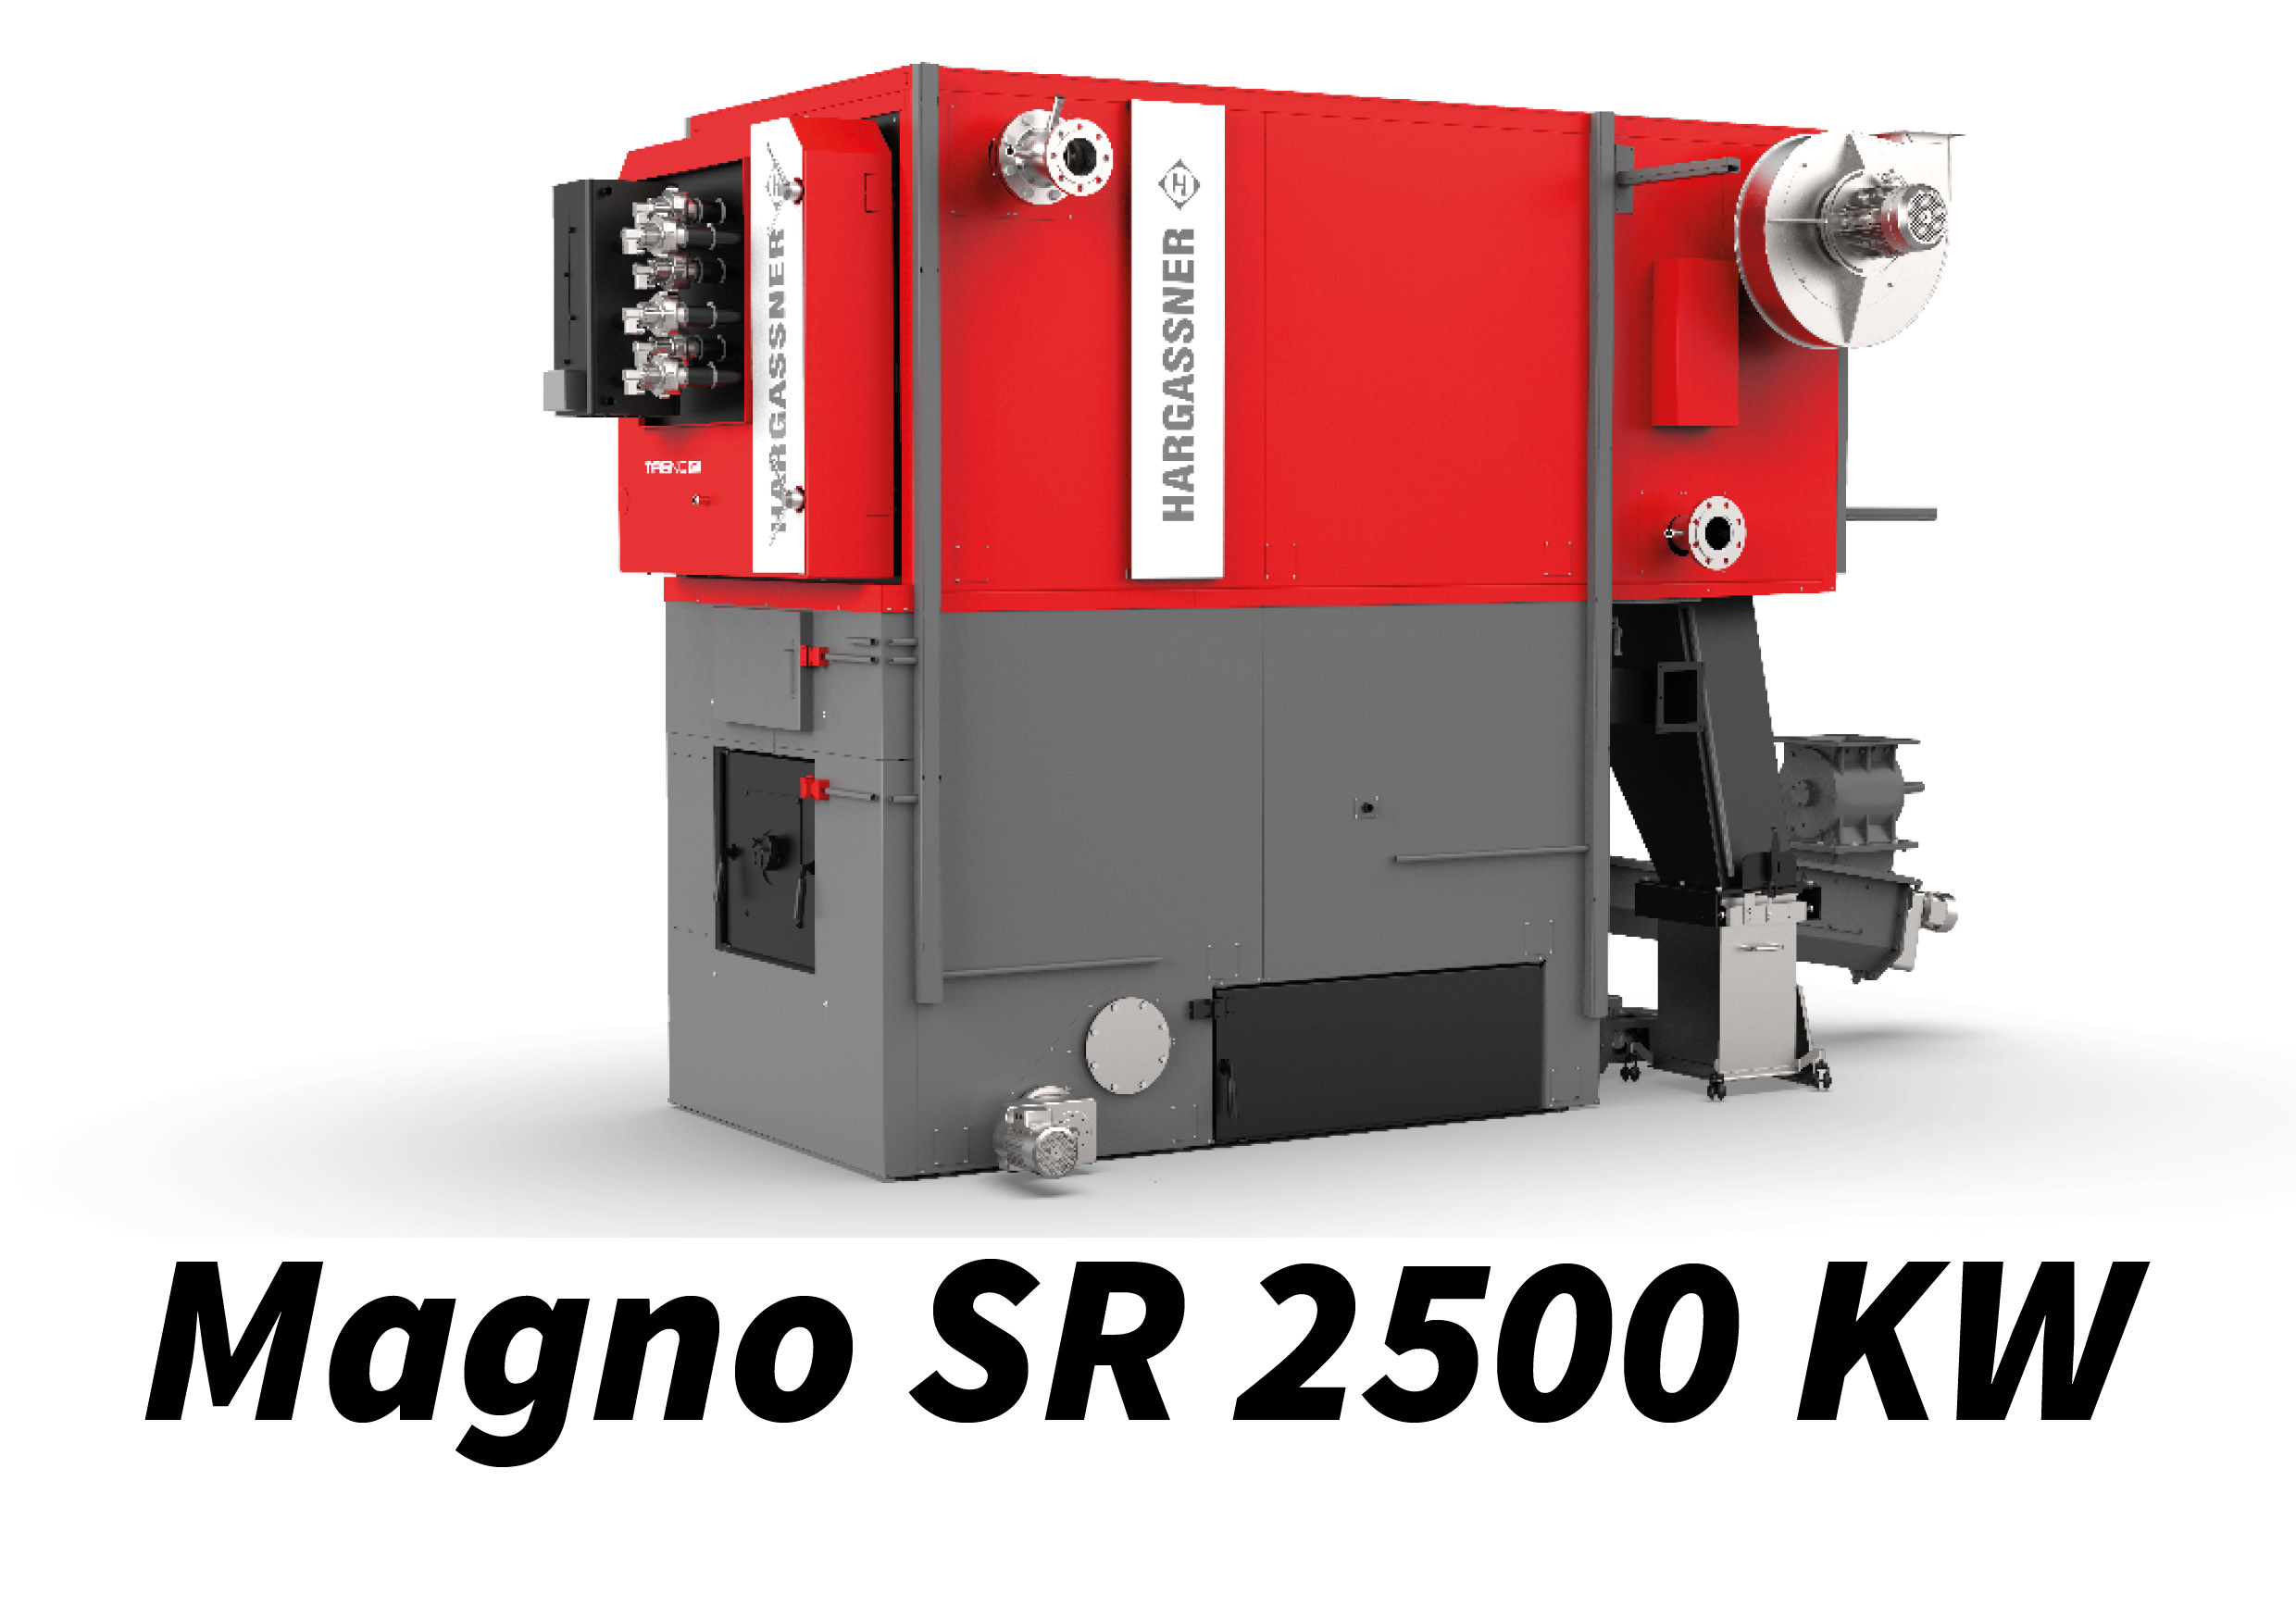 Magno SR 2500 kW